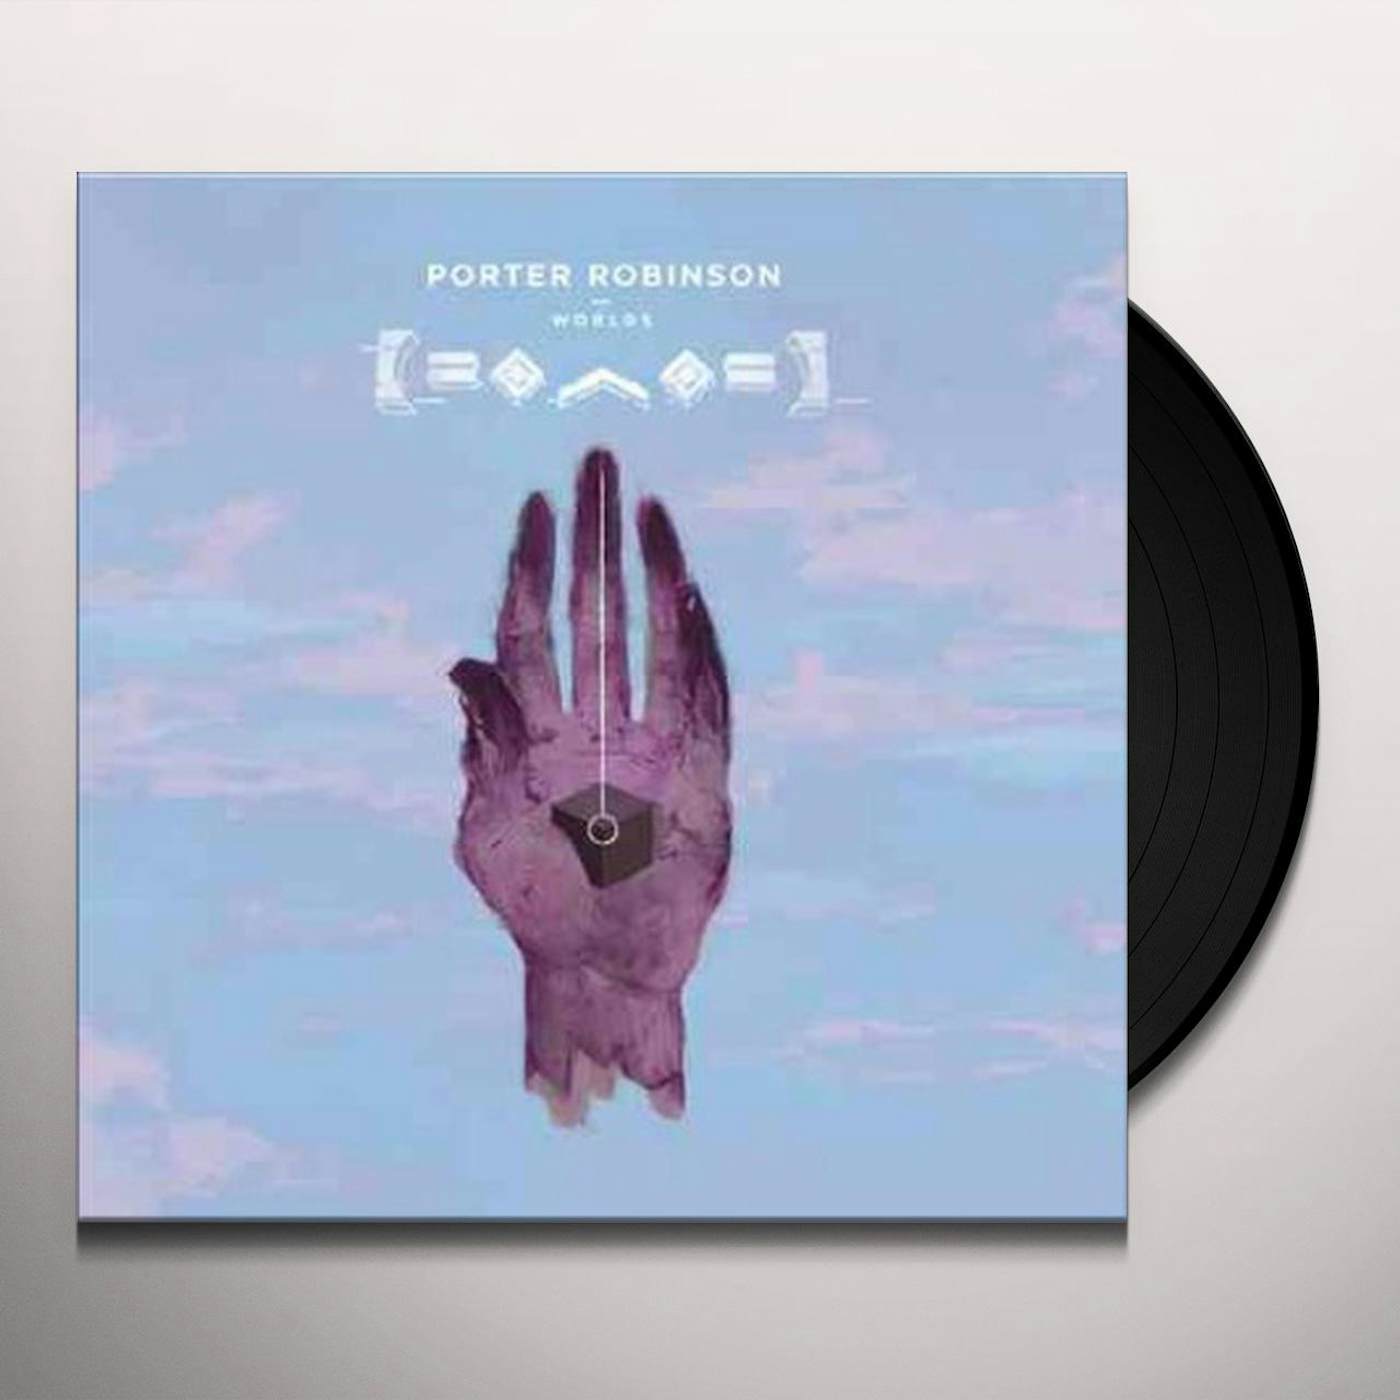 Porter Robinson Worlds Vinyl Record